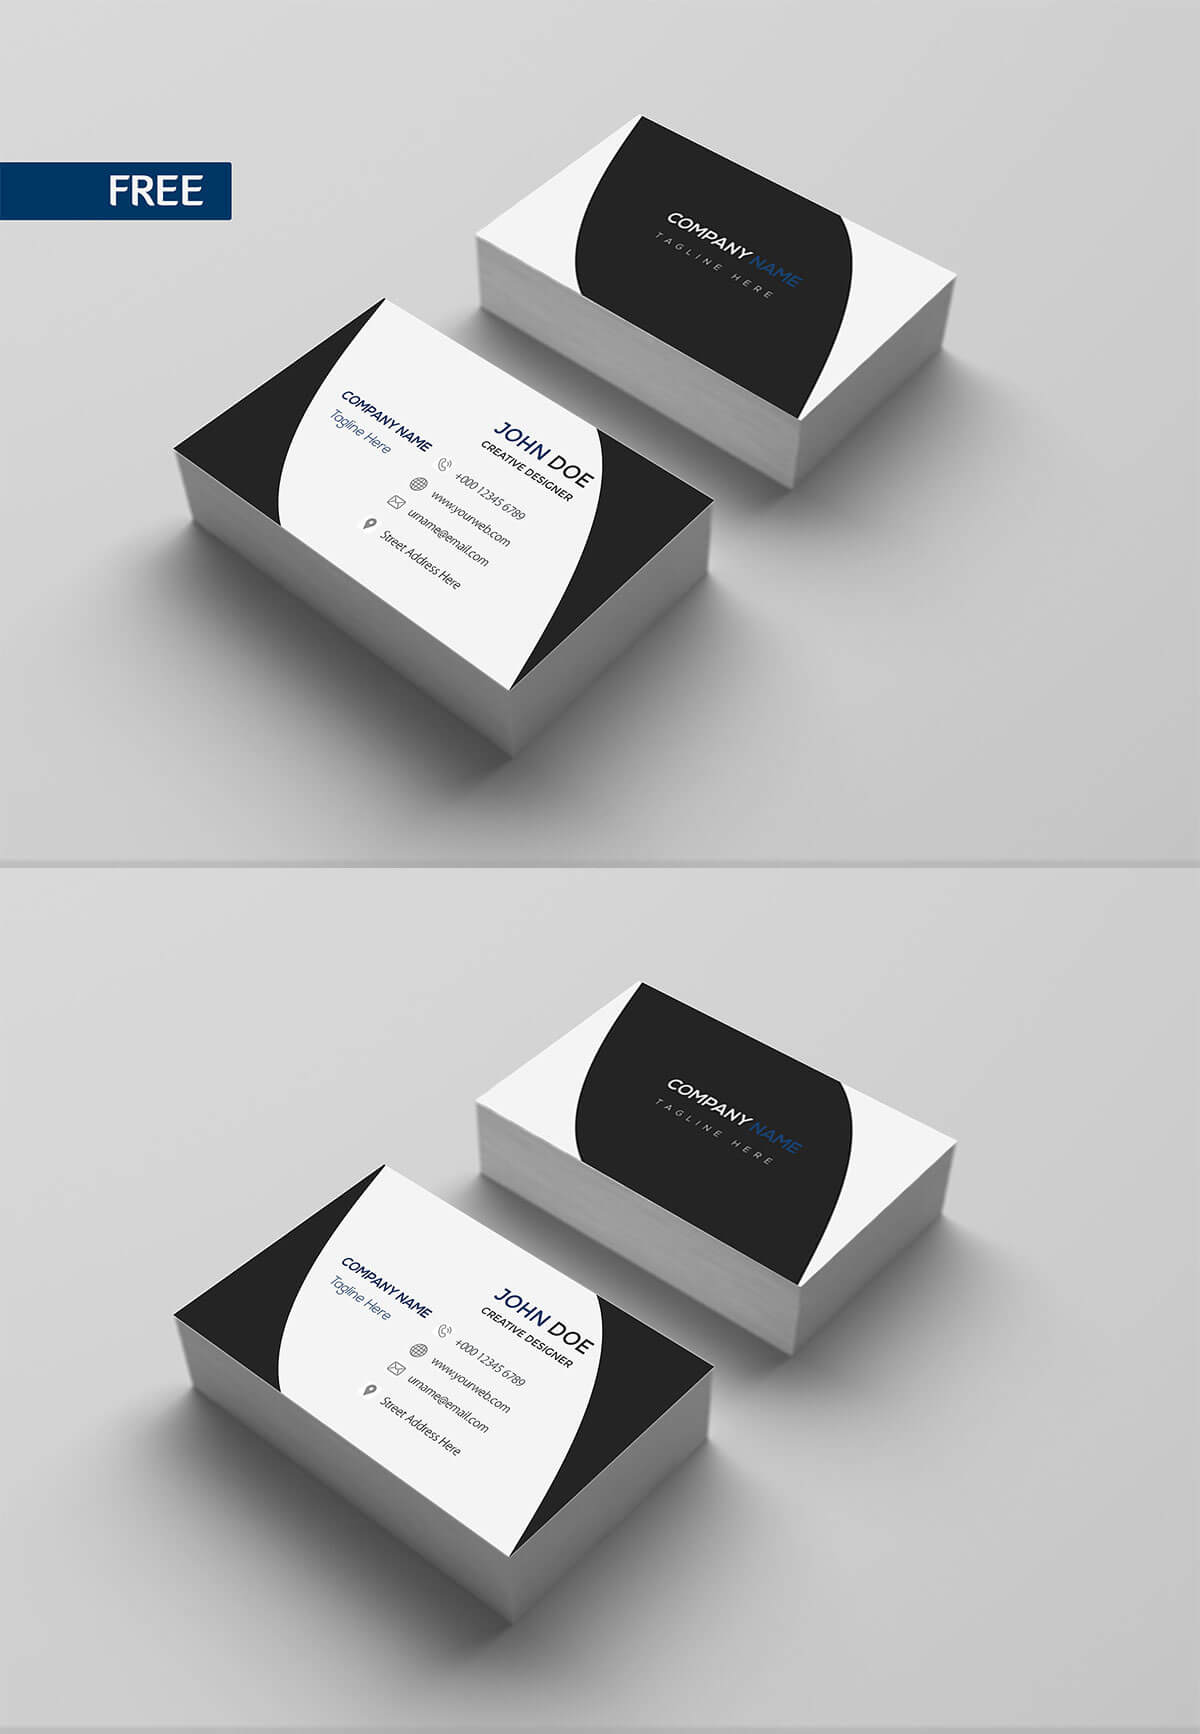 Free Print Design Business Card Template – Creativetacos With Free Template Business Cards To Print